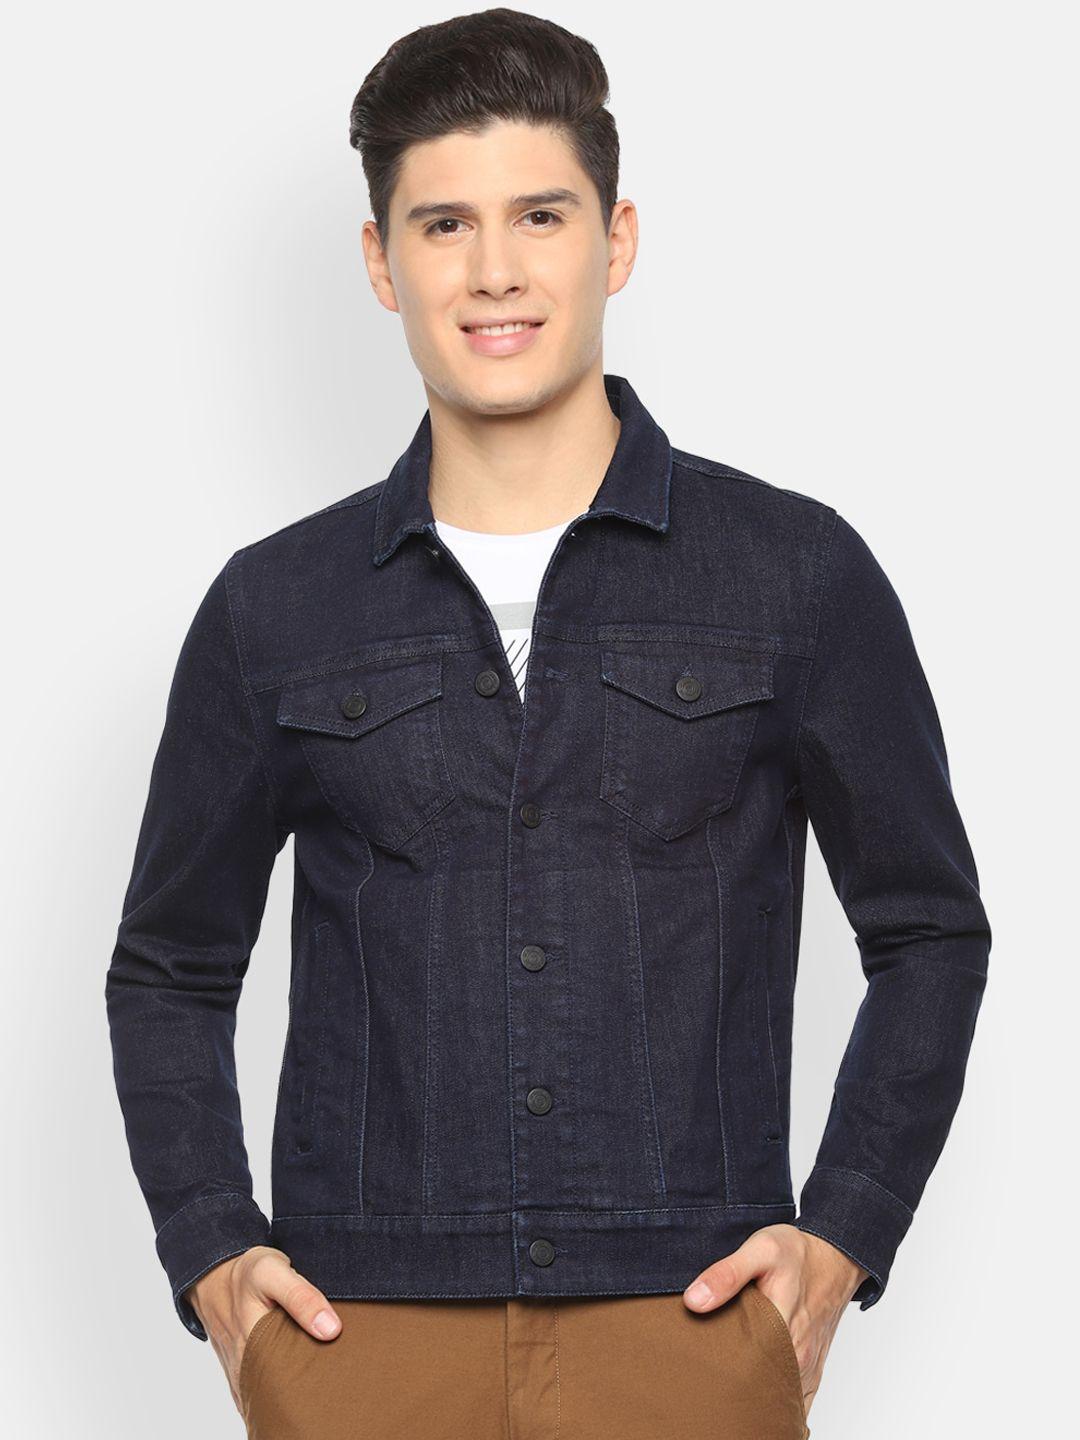 louis-philippe-jeans-men-navy-blue-solid-denim-jacket